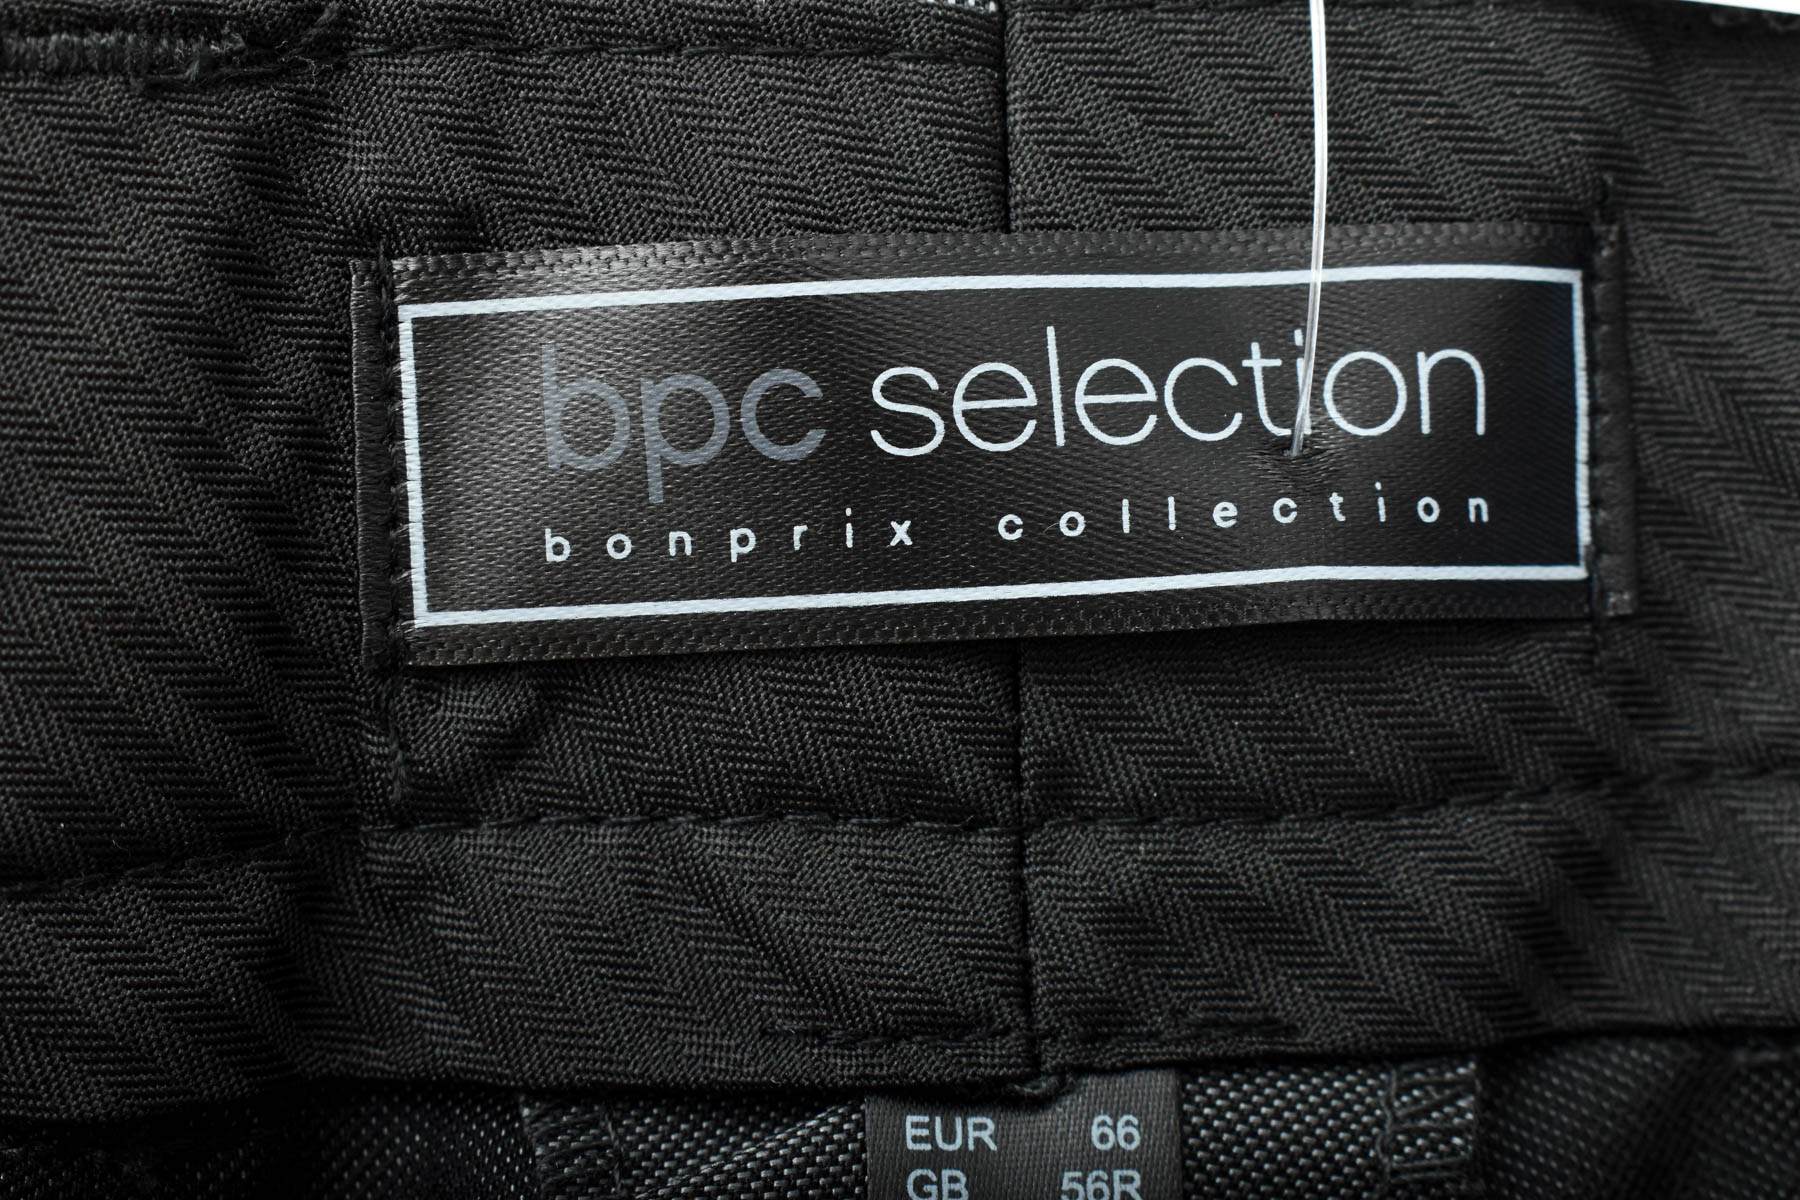 Мъжки панталон - Bpc selection bonprix collection - 2